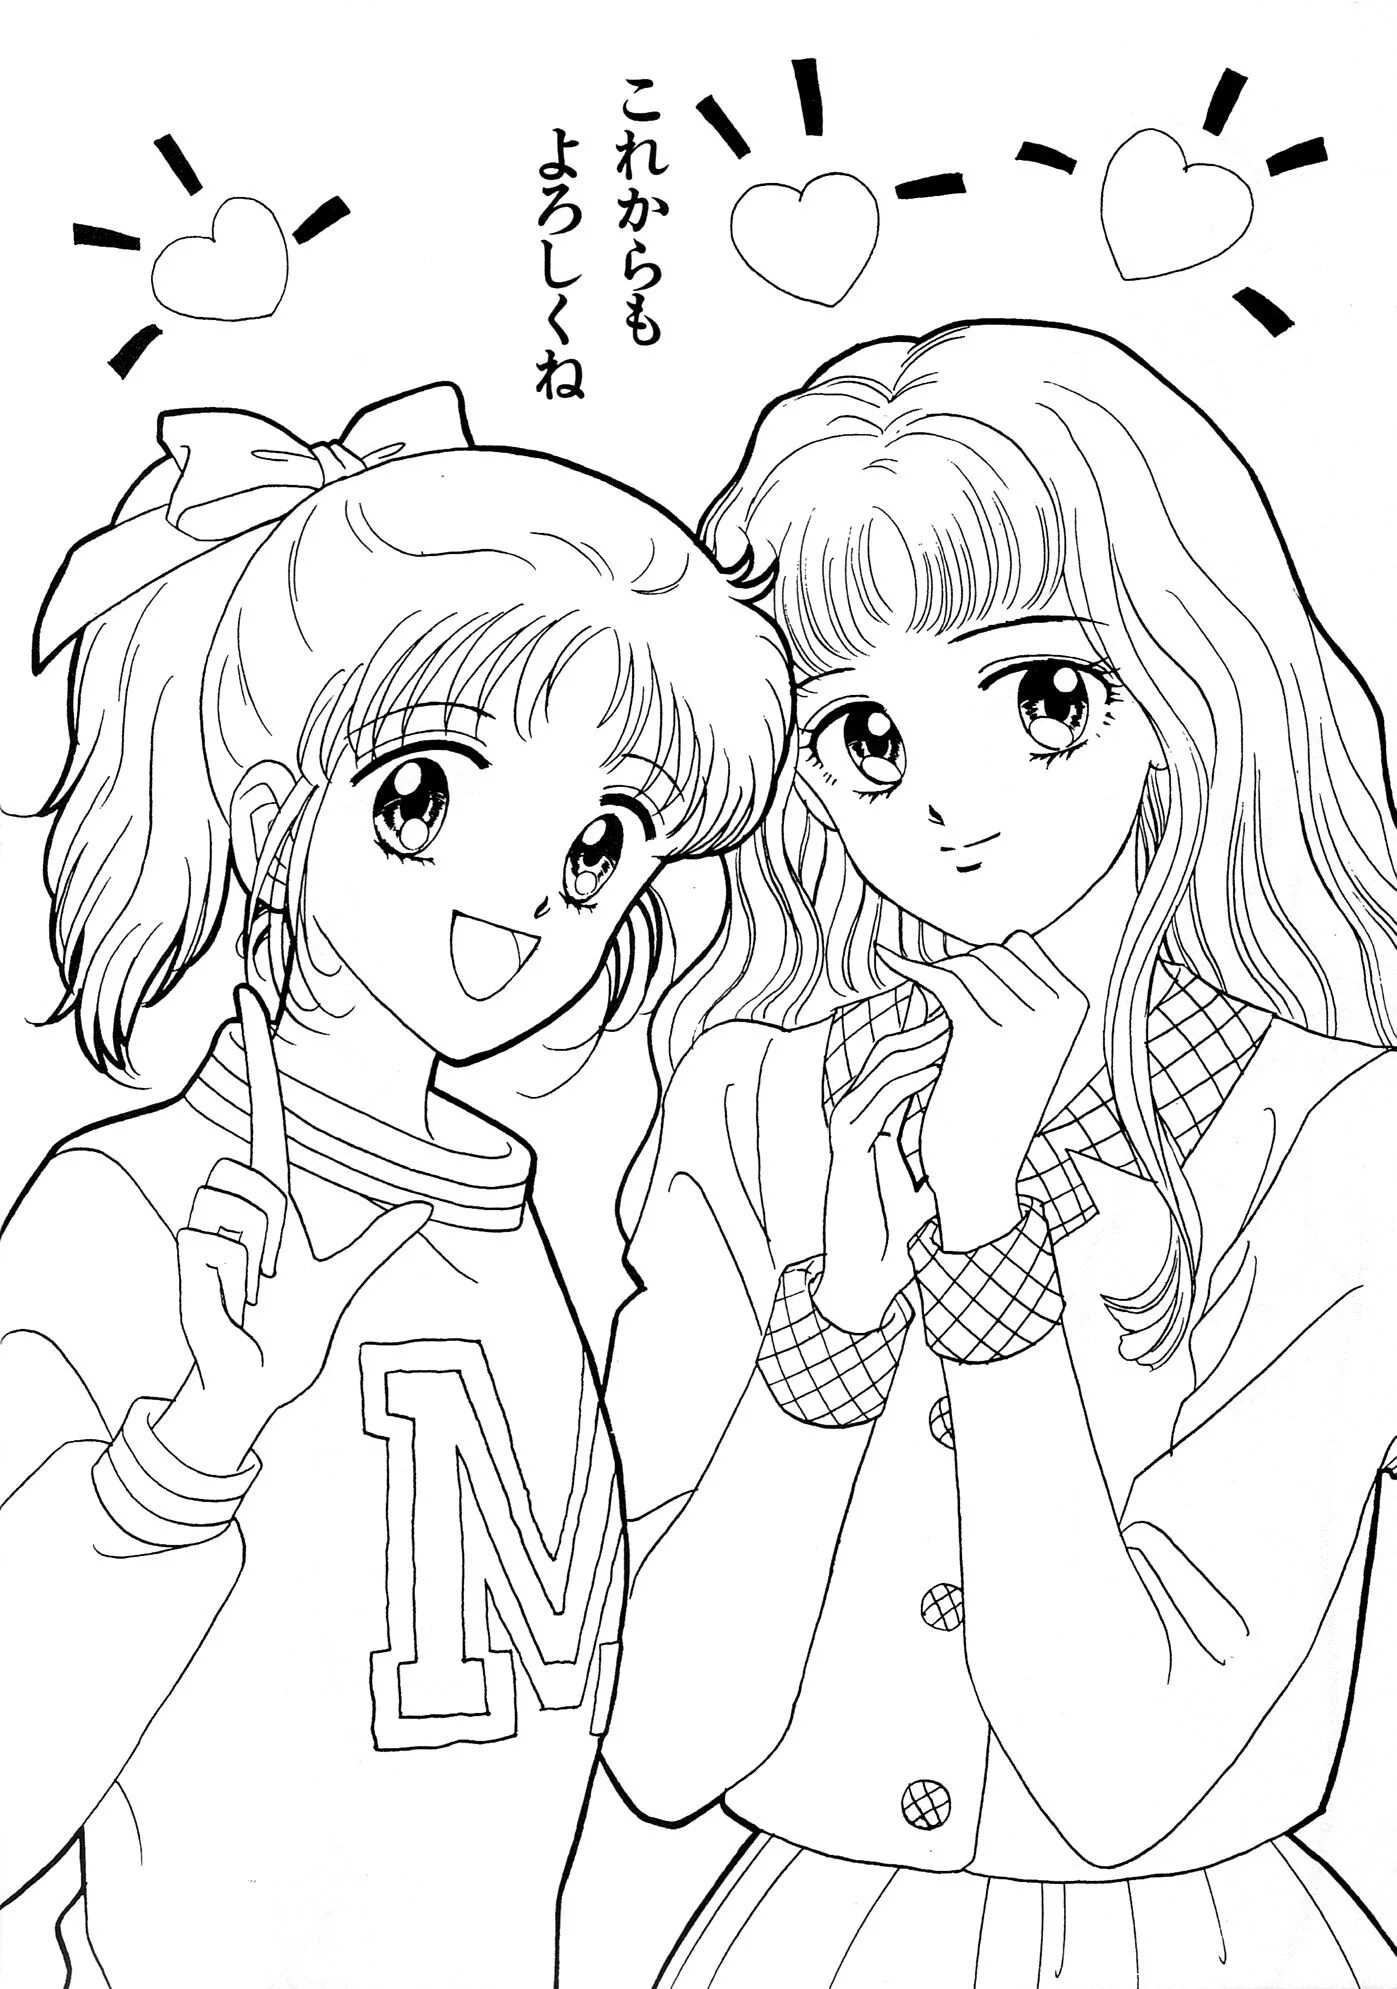 Anime girlfriends #7